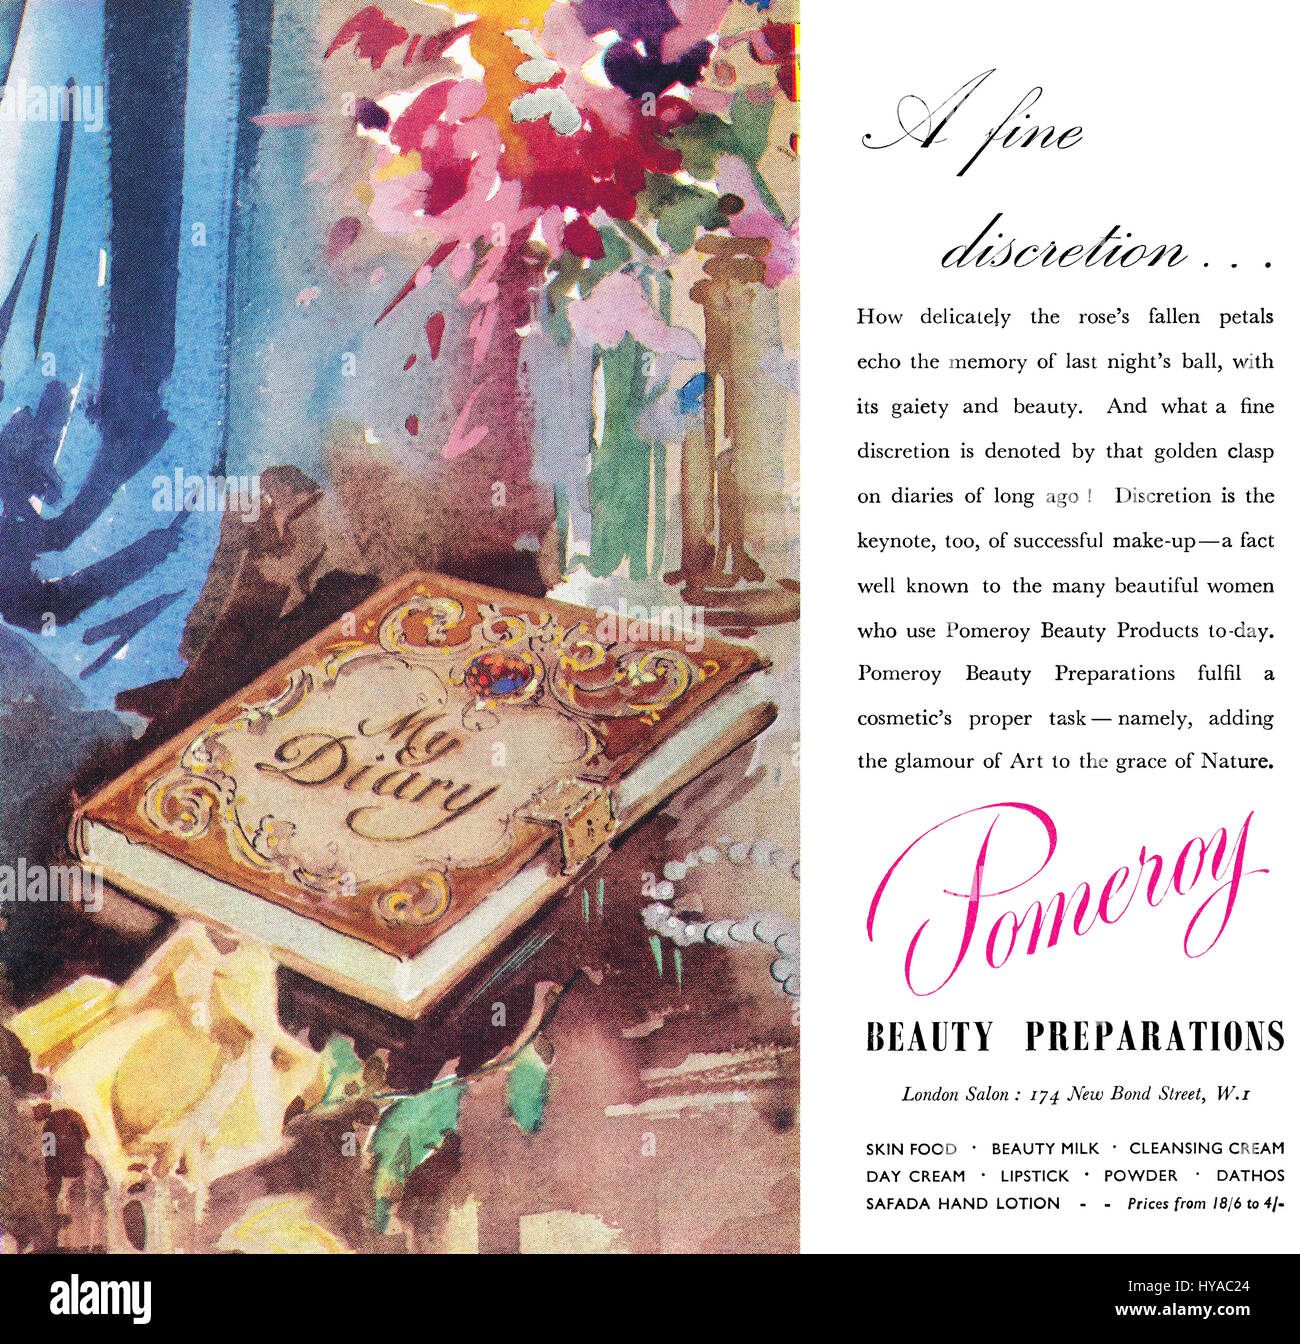 1946 British advertisement for Pomeroy Beauty Preparations. Stock Photo